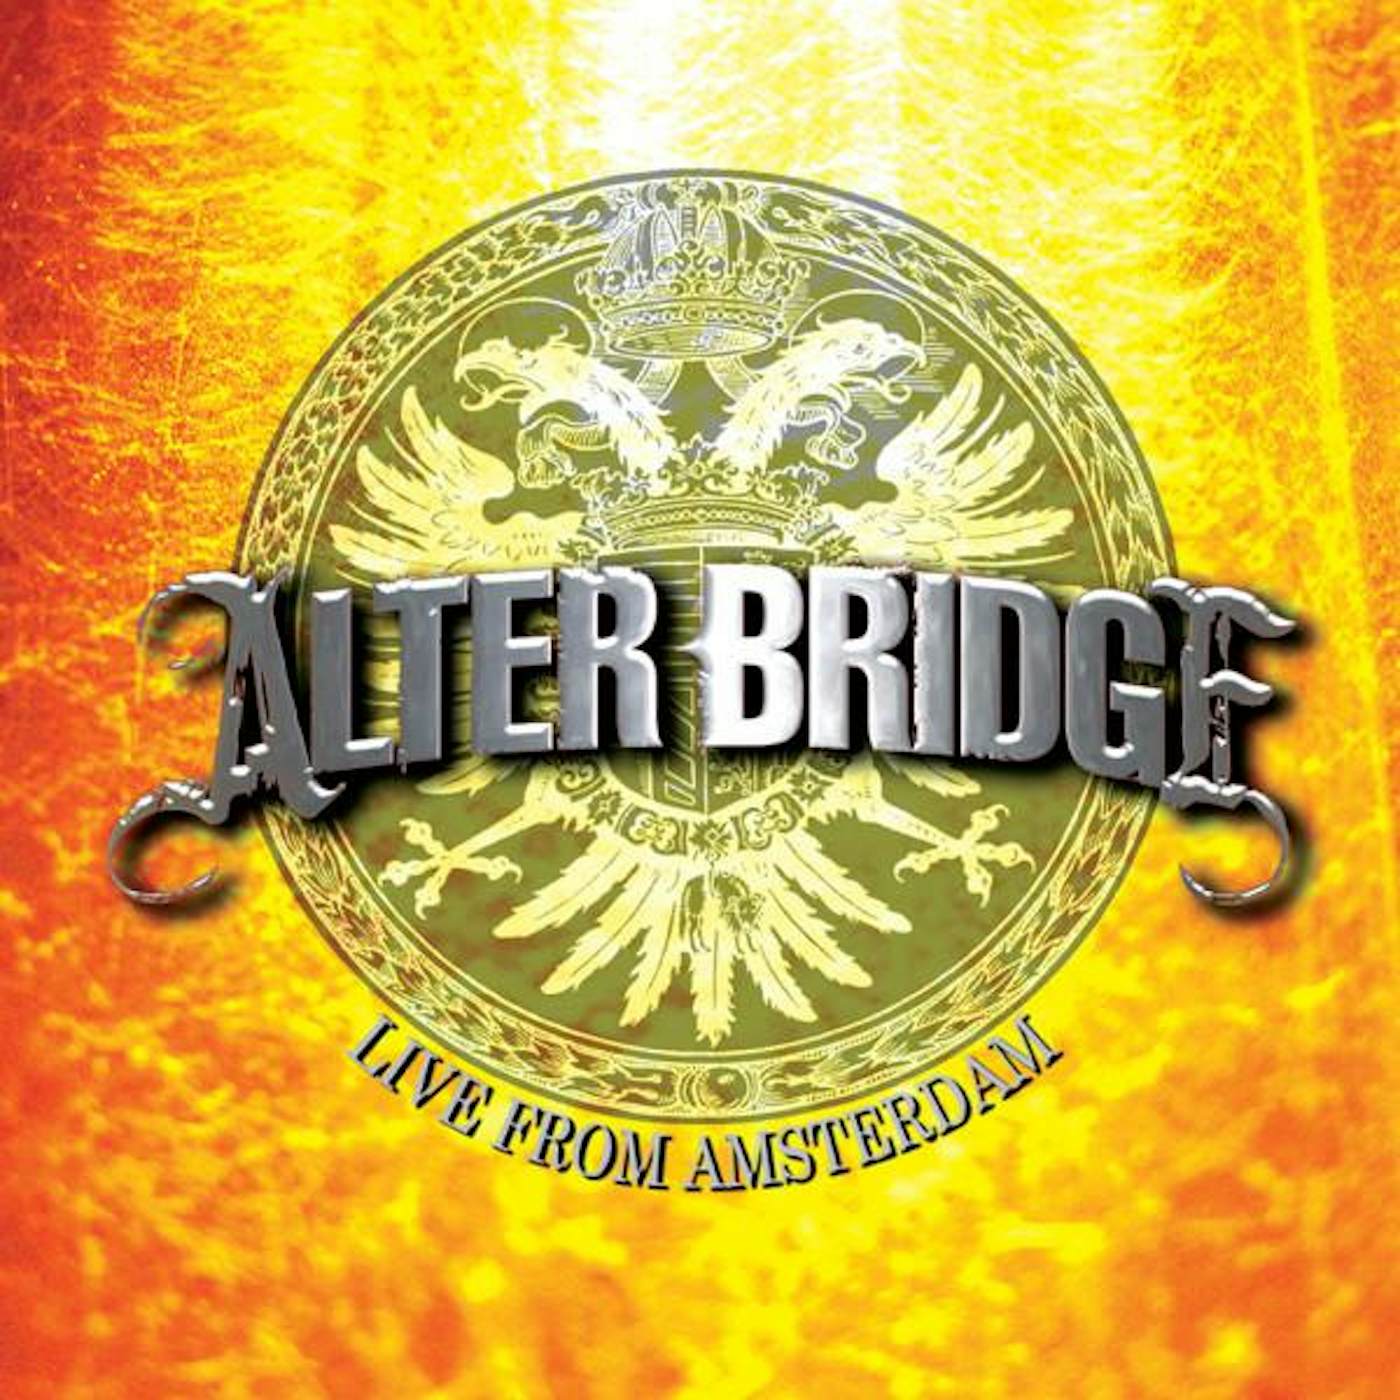 ALTER BRIDGE LIVE FROM AMSTERDAM CD